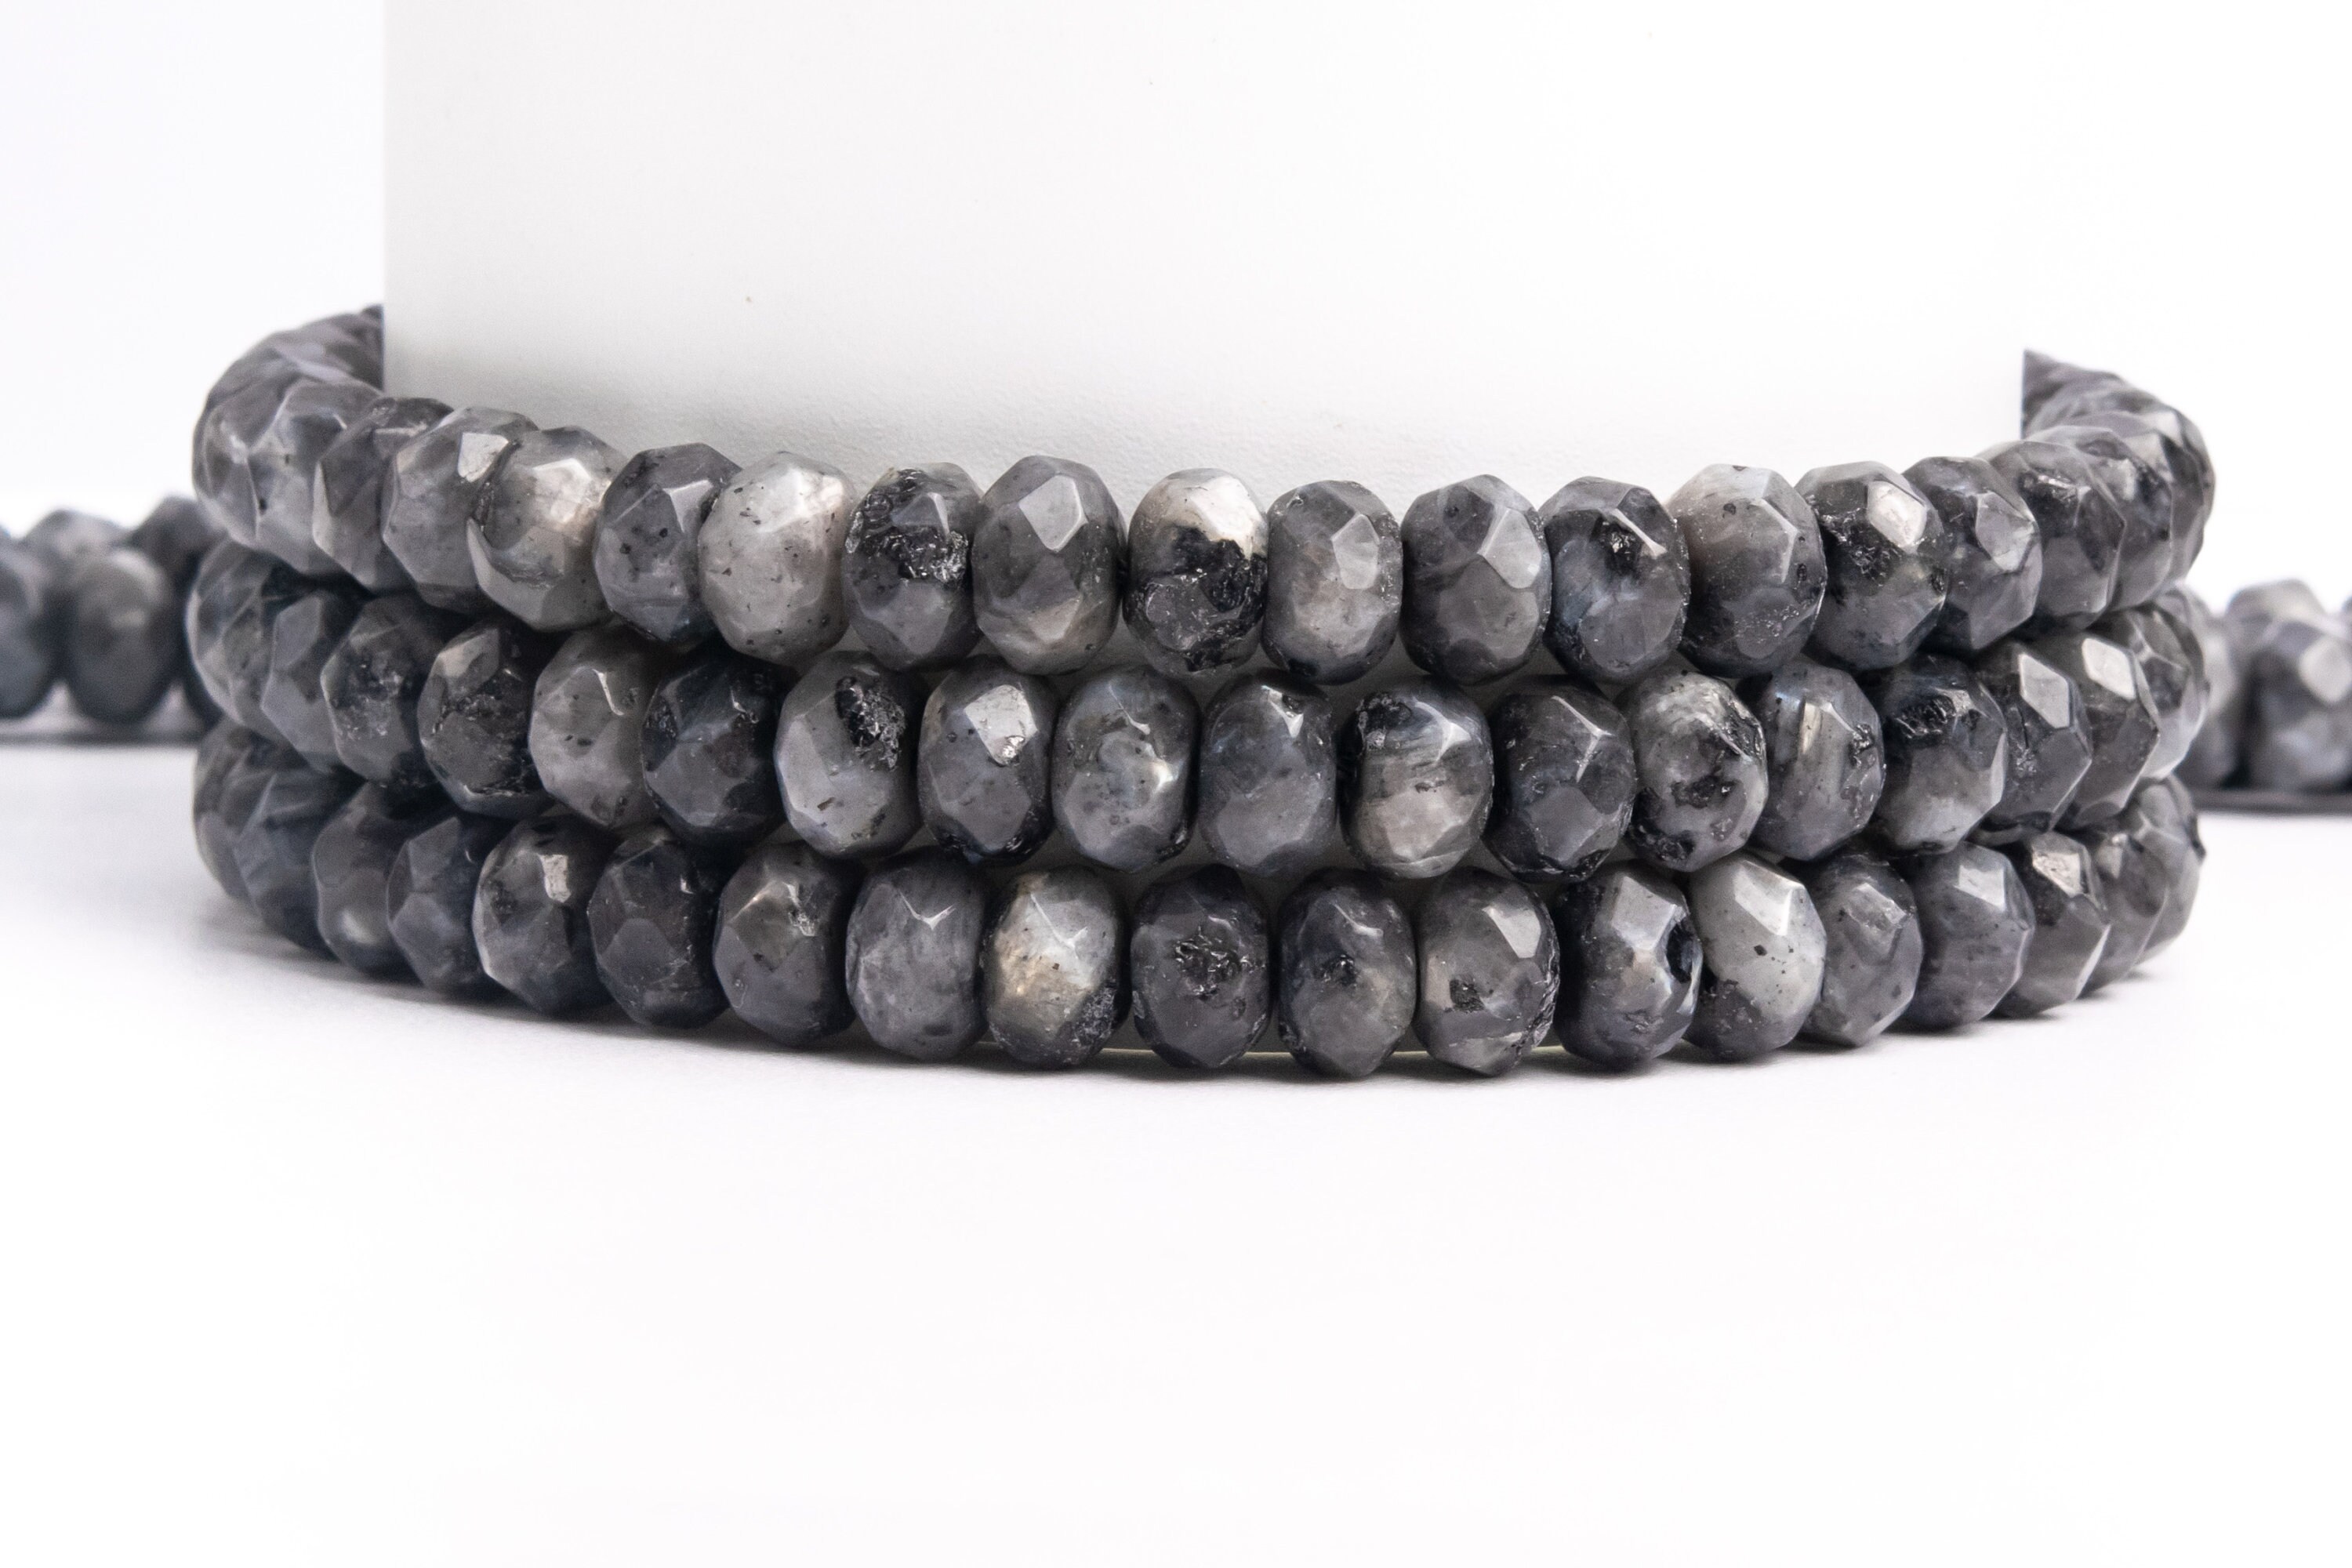 Black Gemstone Beads For Jewelry Making